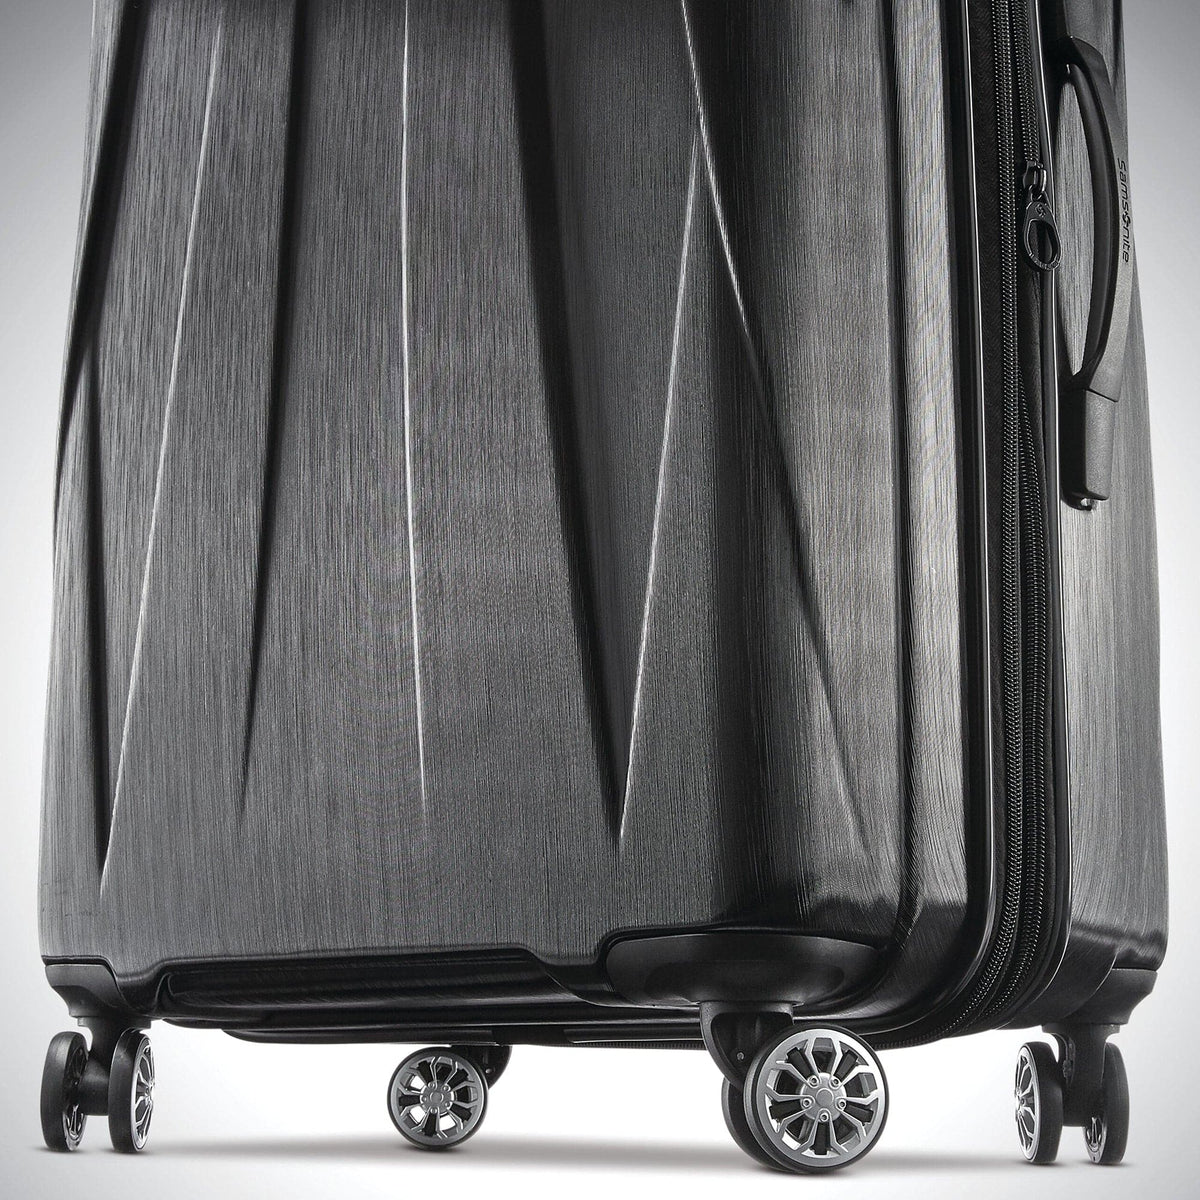 Samsonite Centric 2 Large Spinner Luggage